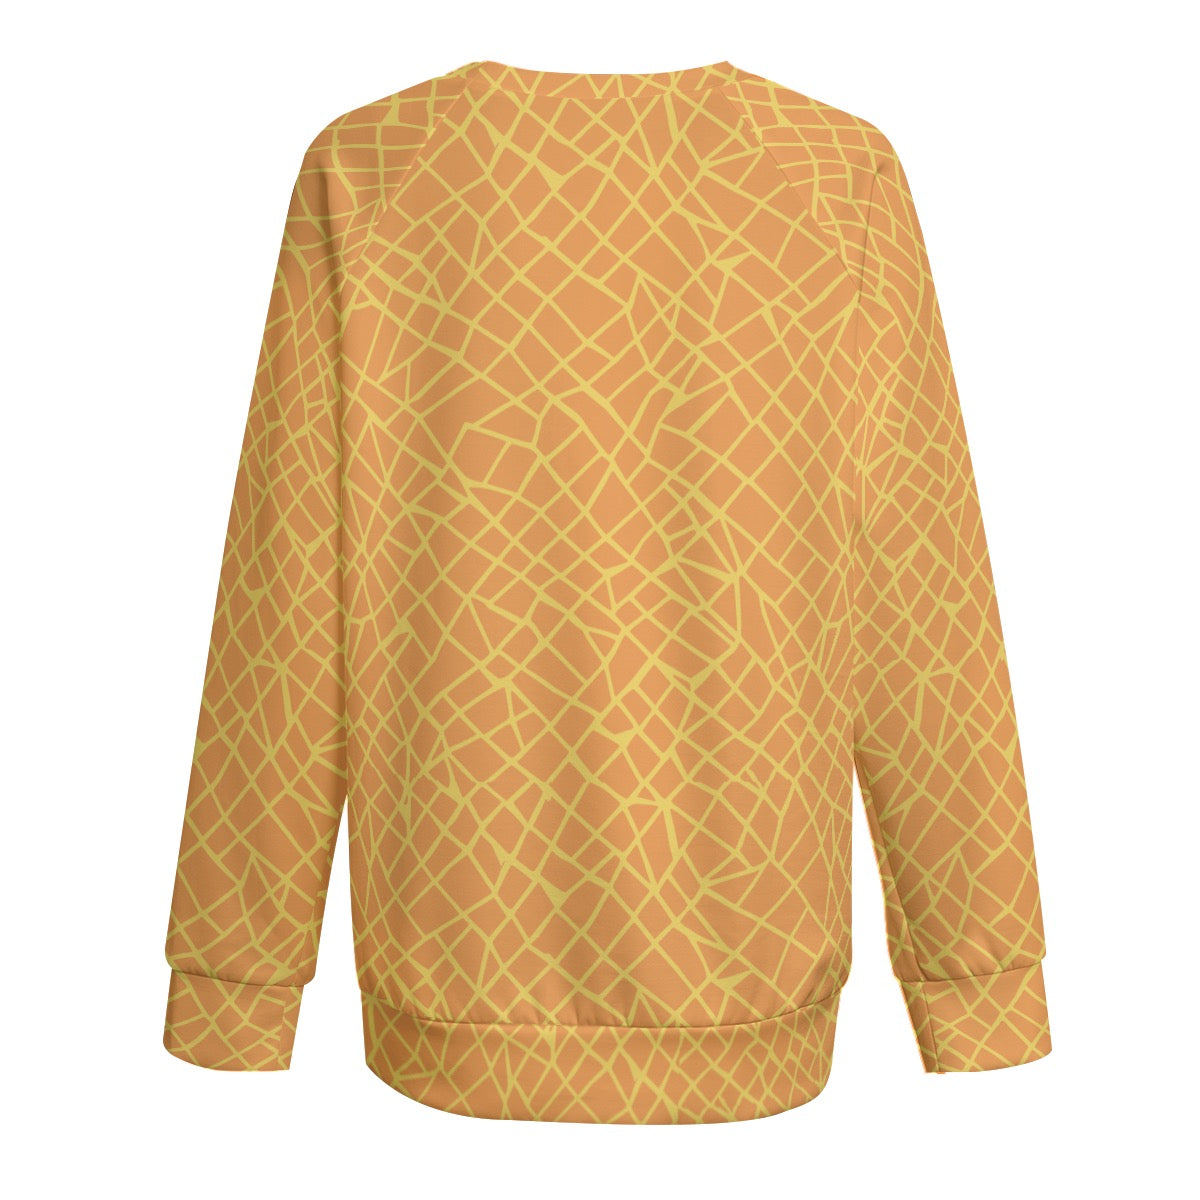 Bayview -- Women's Sweatshirt With Raglan Sleeve | Interlock